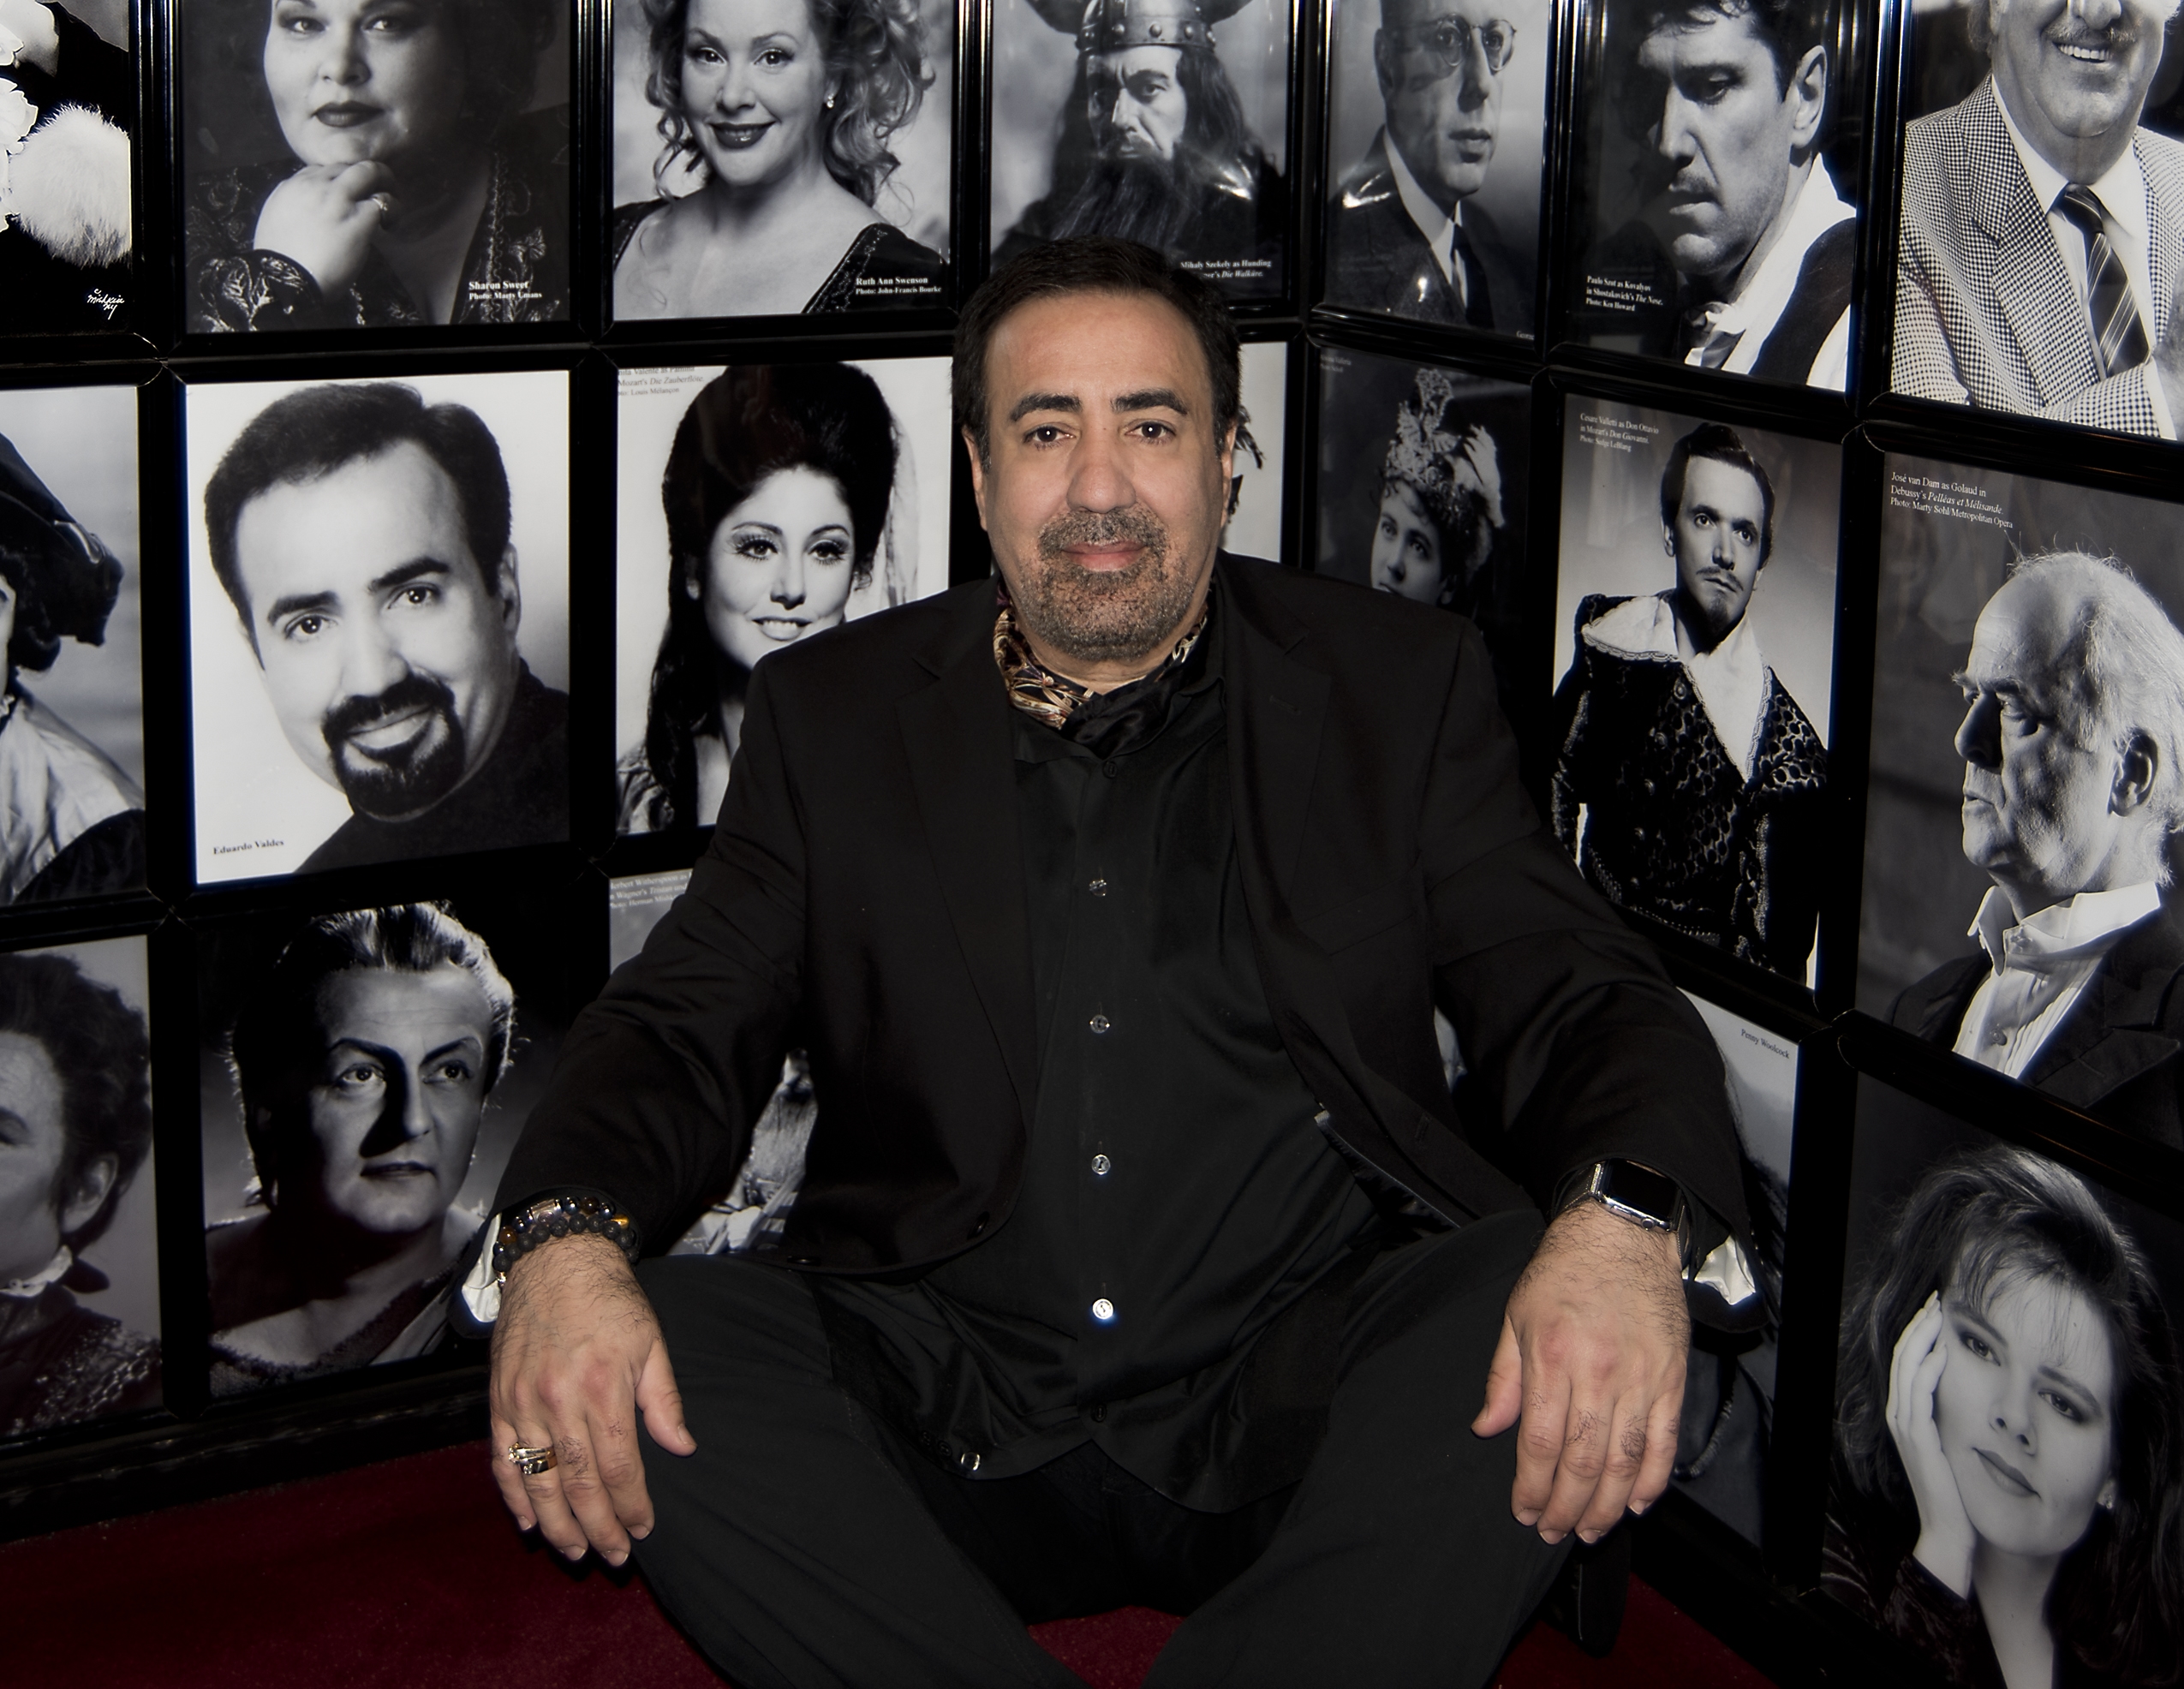 Eduardo Valdes in front of wall of musician photos